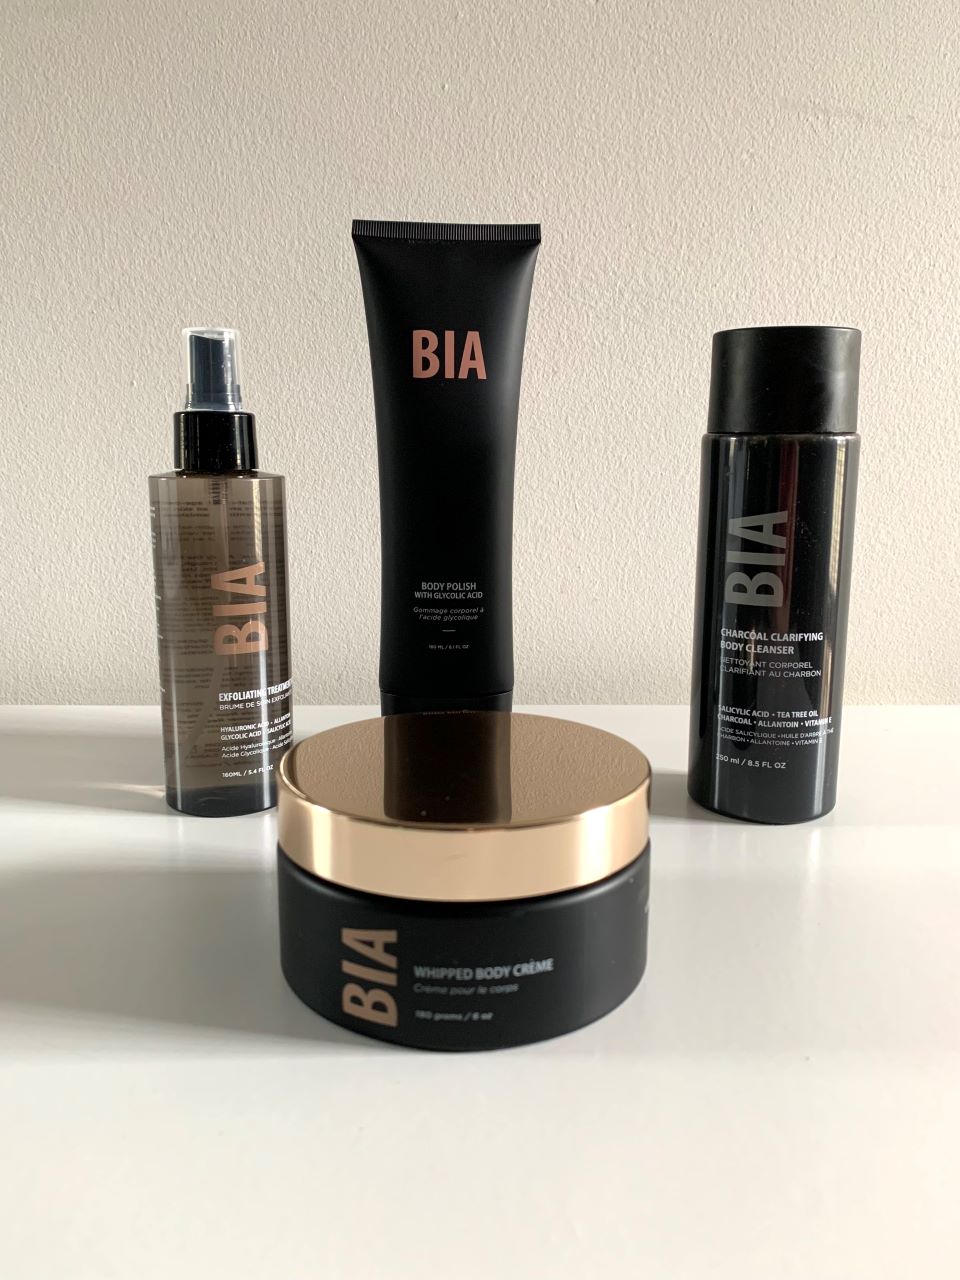 BIA Skin bath and body products